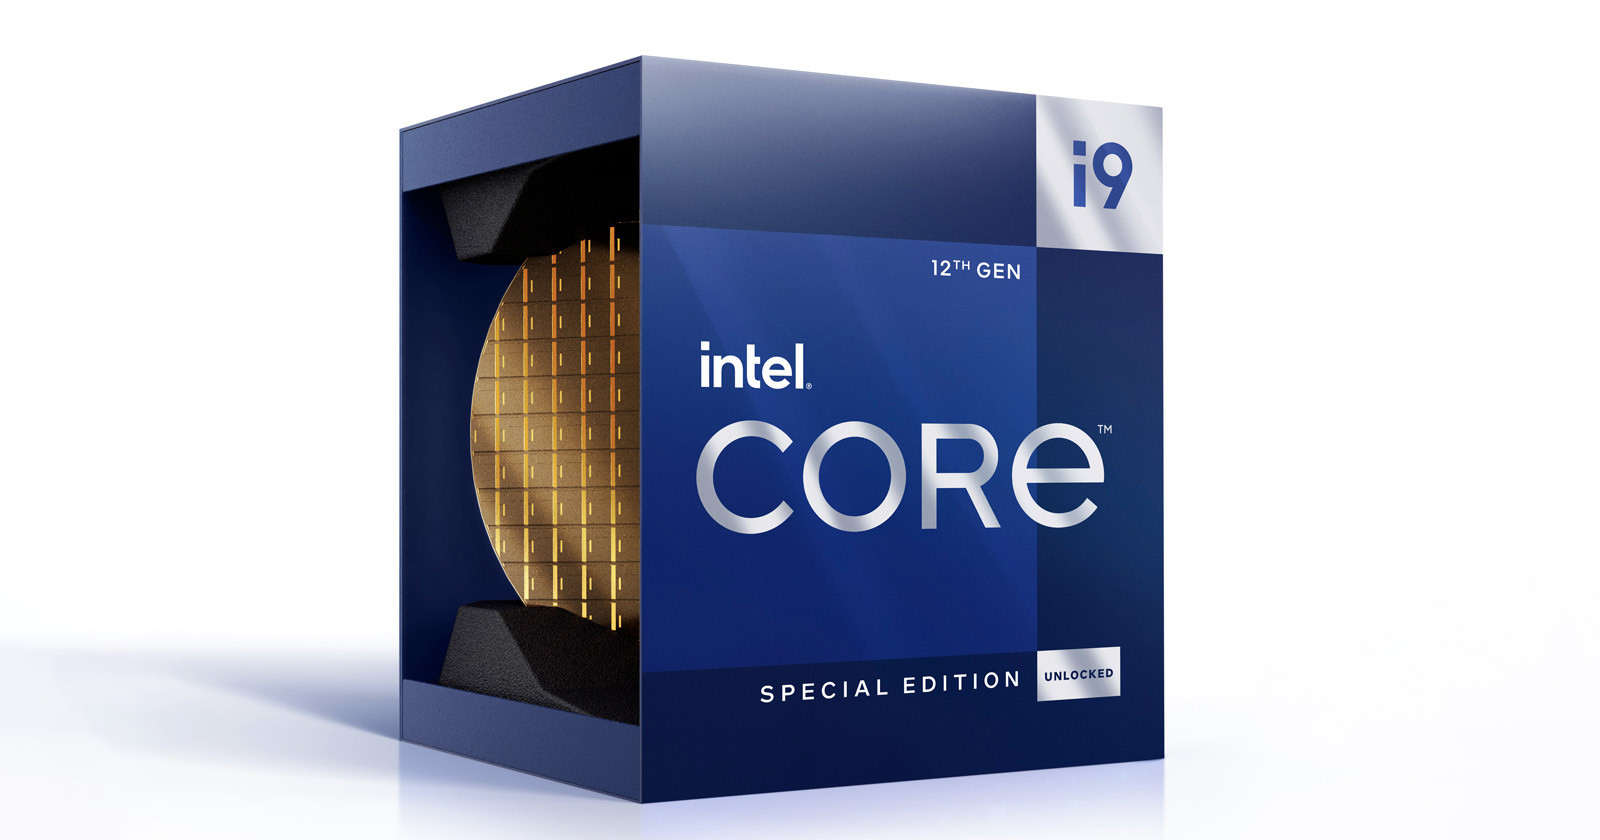 Intel Says its Has Worlds Fastest Processor: Unlocked Core i9-12900KS